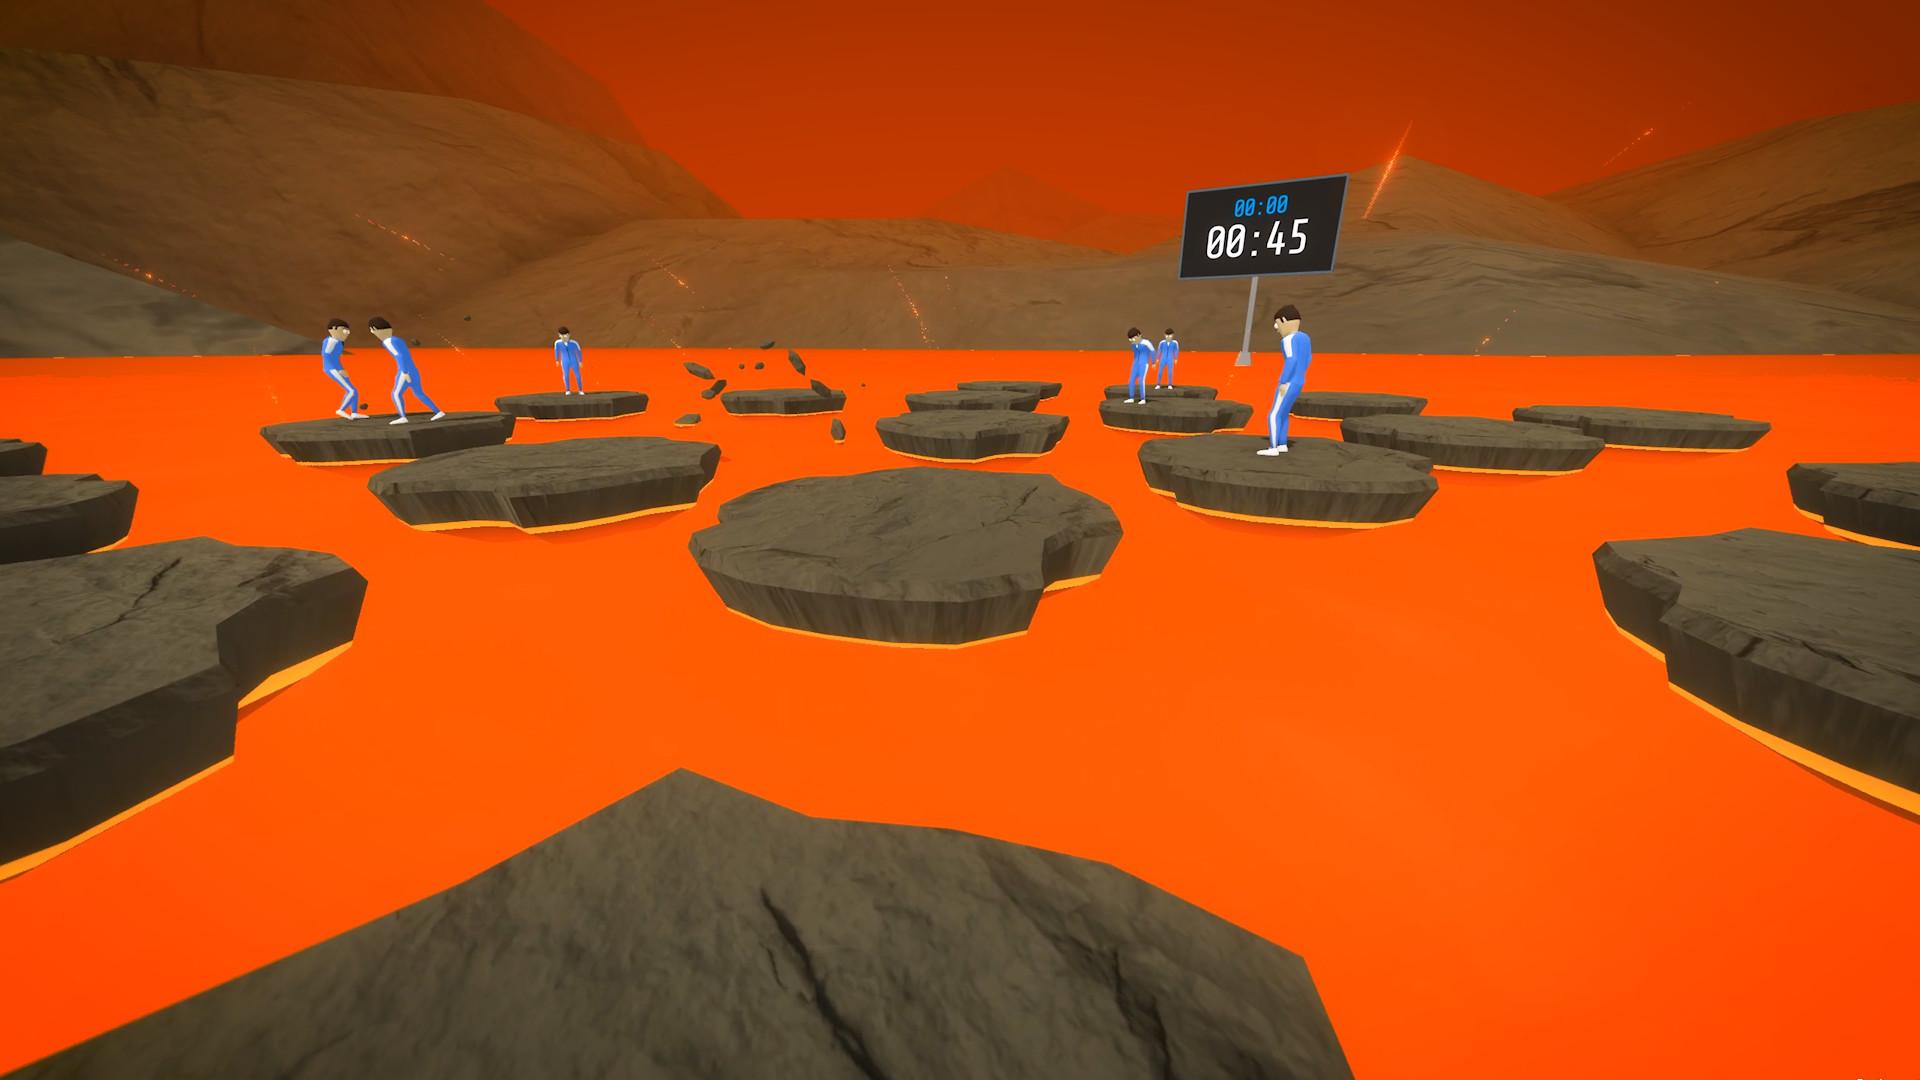 Crab Game - Floor is Lava Screenshot